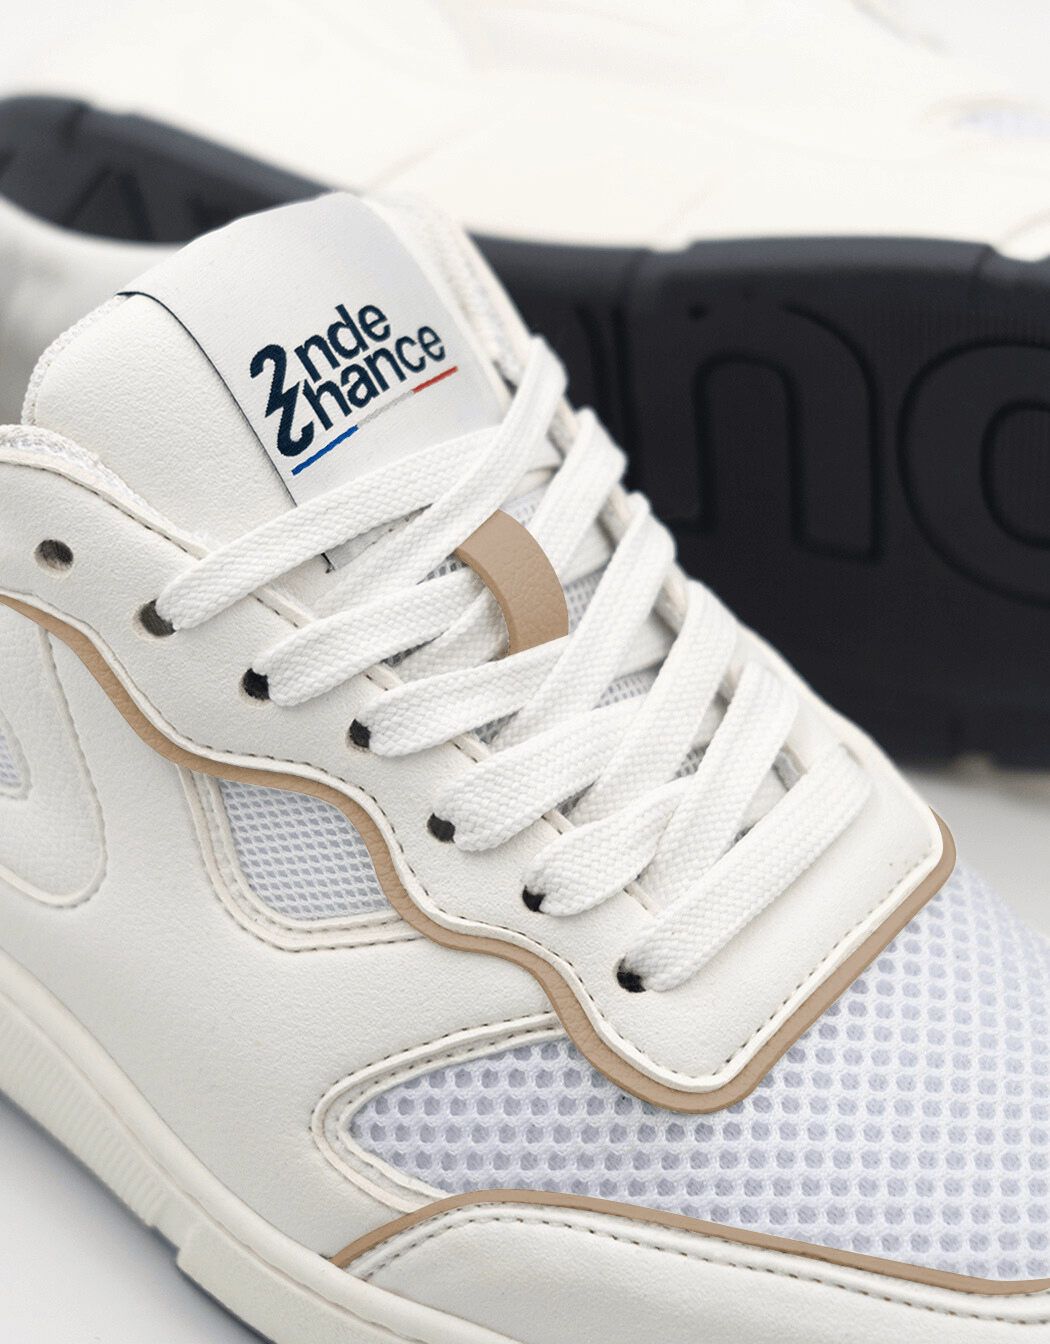 sneakers-2ndechance-basket-madeinfrance-blanc-mastic-35-au-47-matiere-haut-de-gamme